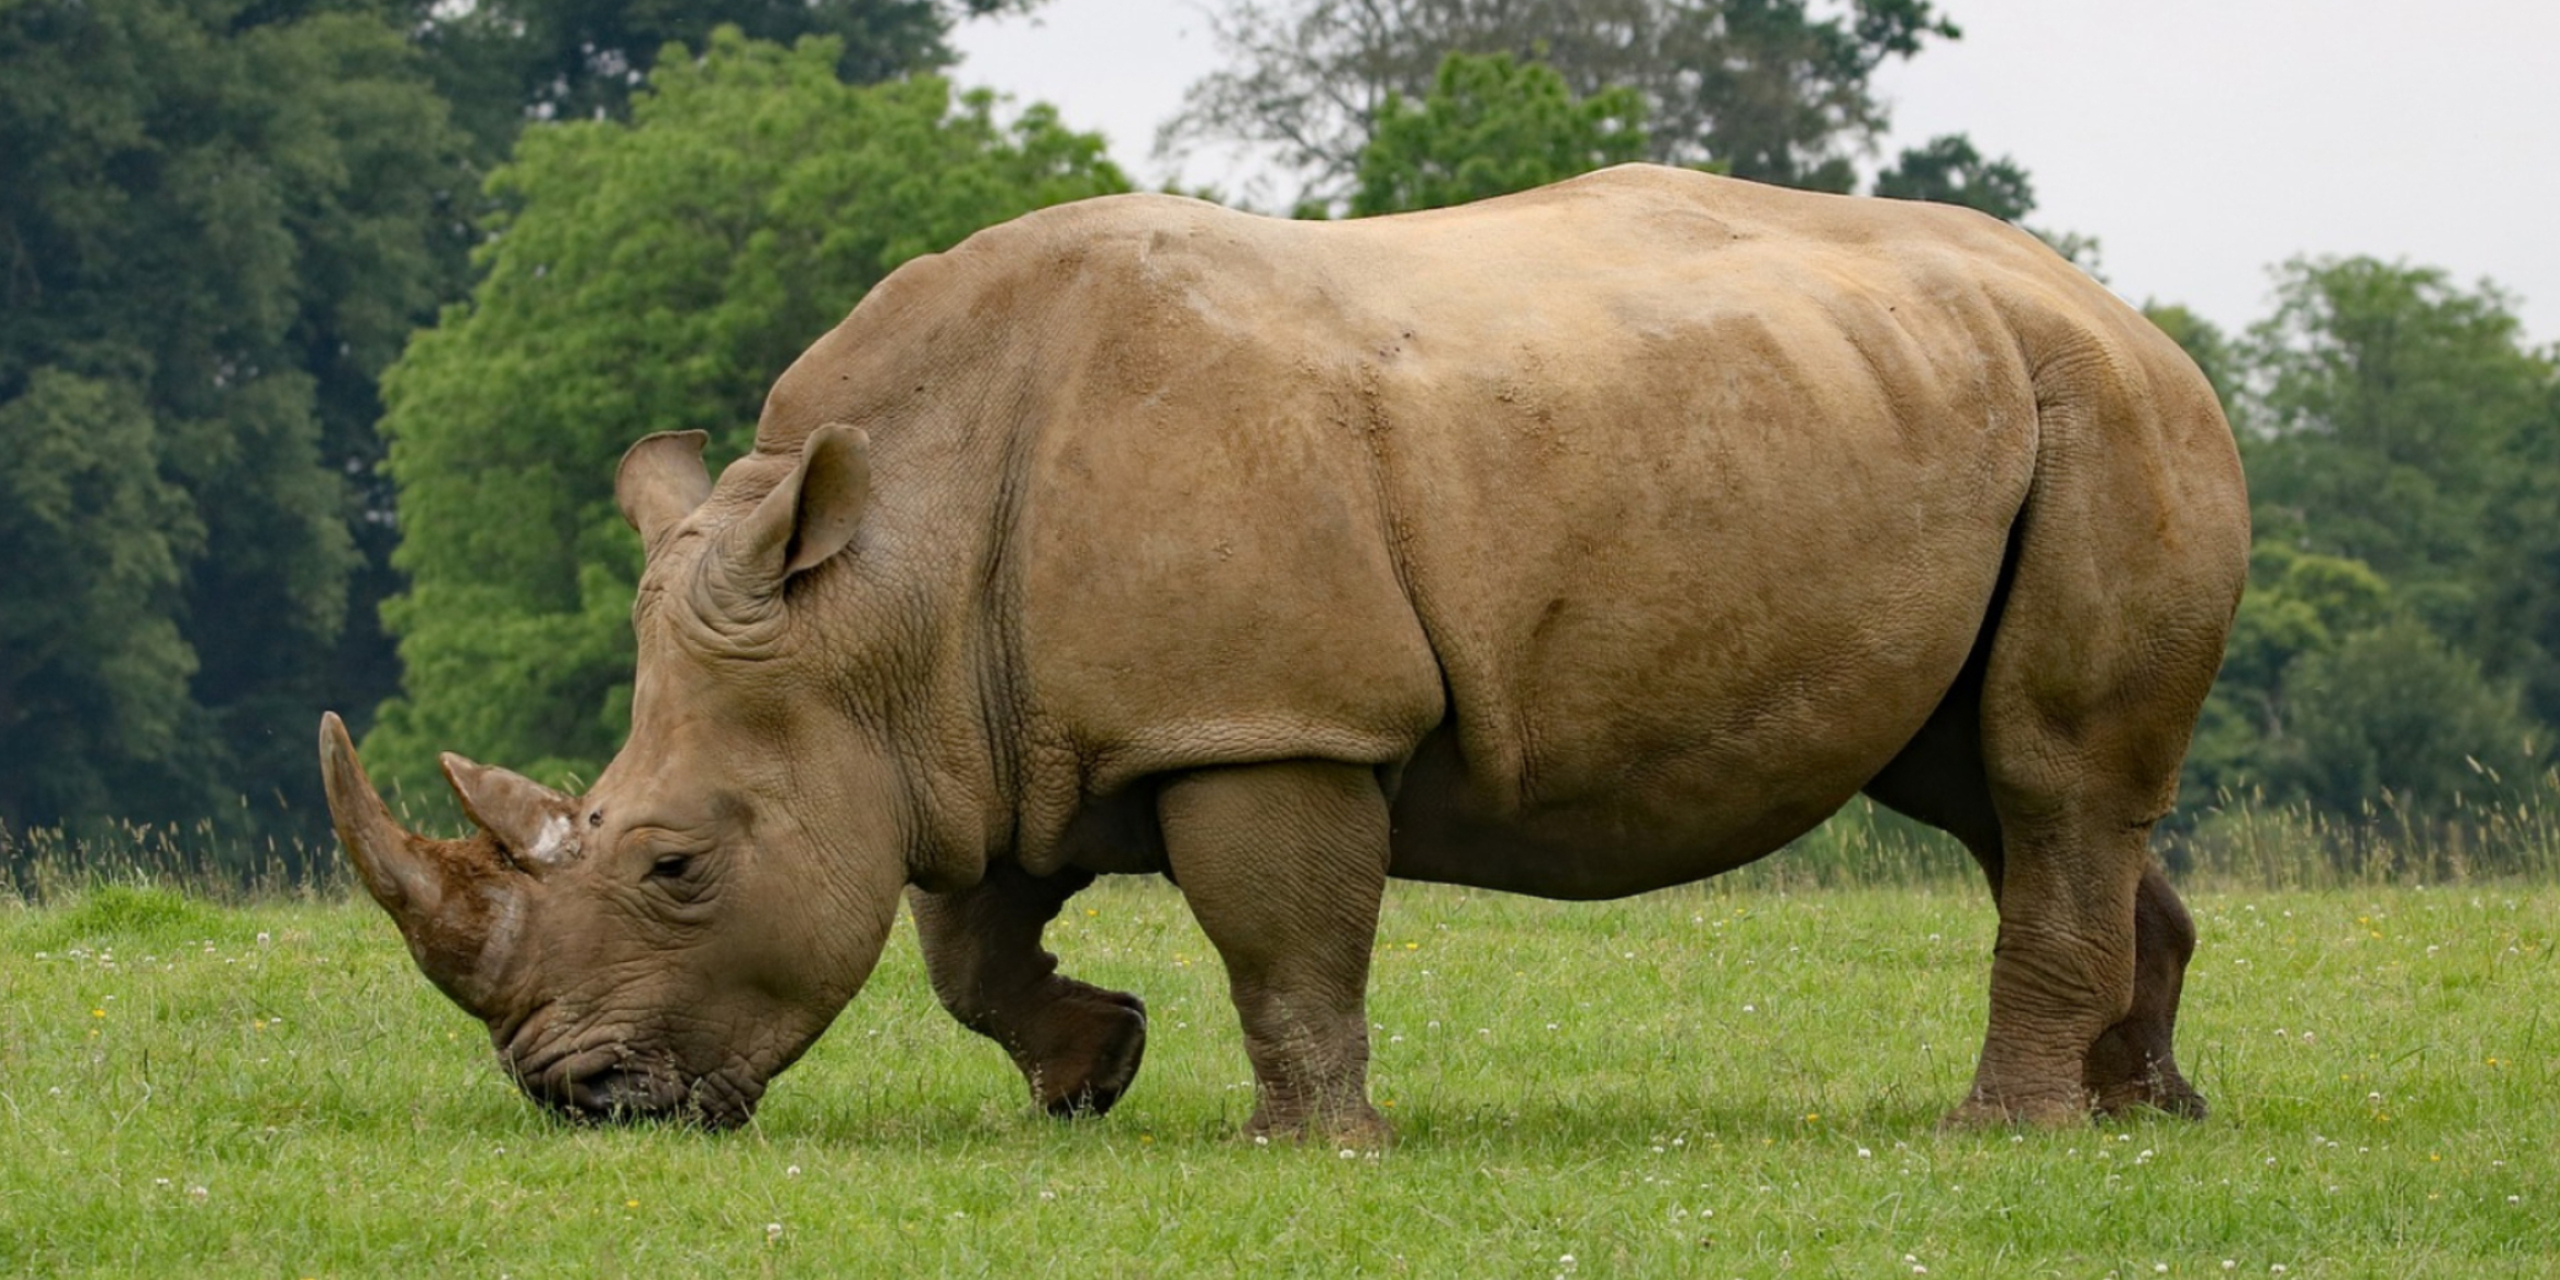 High-definition rhinoceros image, Rhino wallpaper in HD, Rhino picture in high quality, Detailed rhino photo, 2560x1280 Dual Screen Desktop